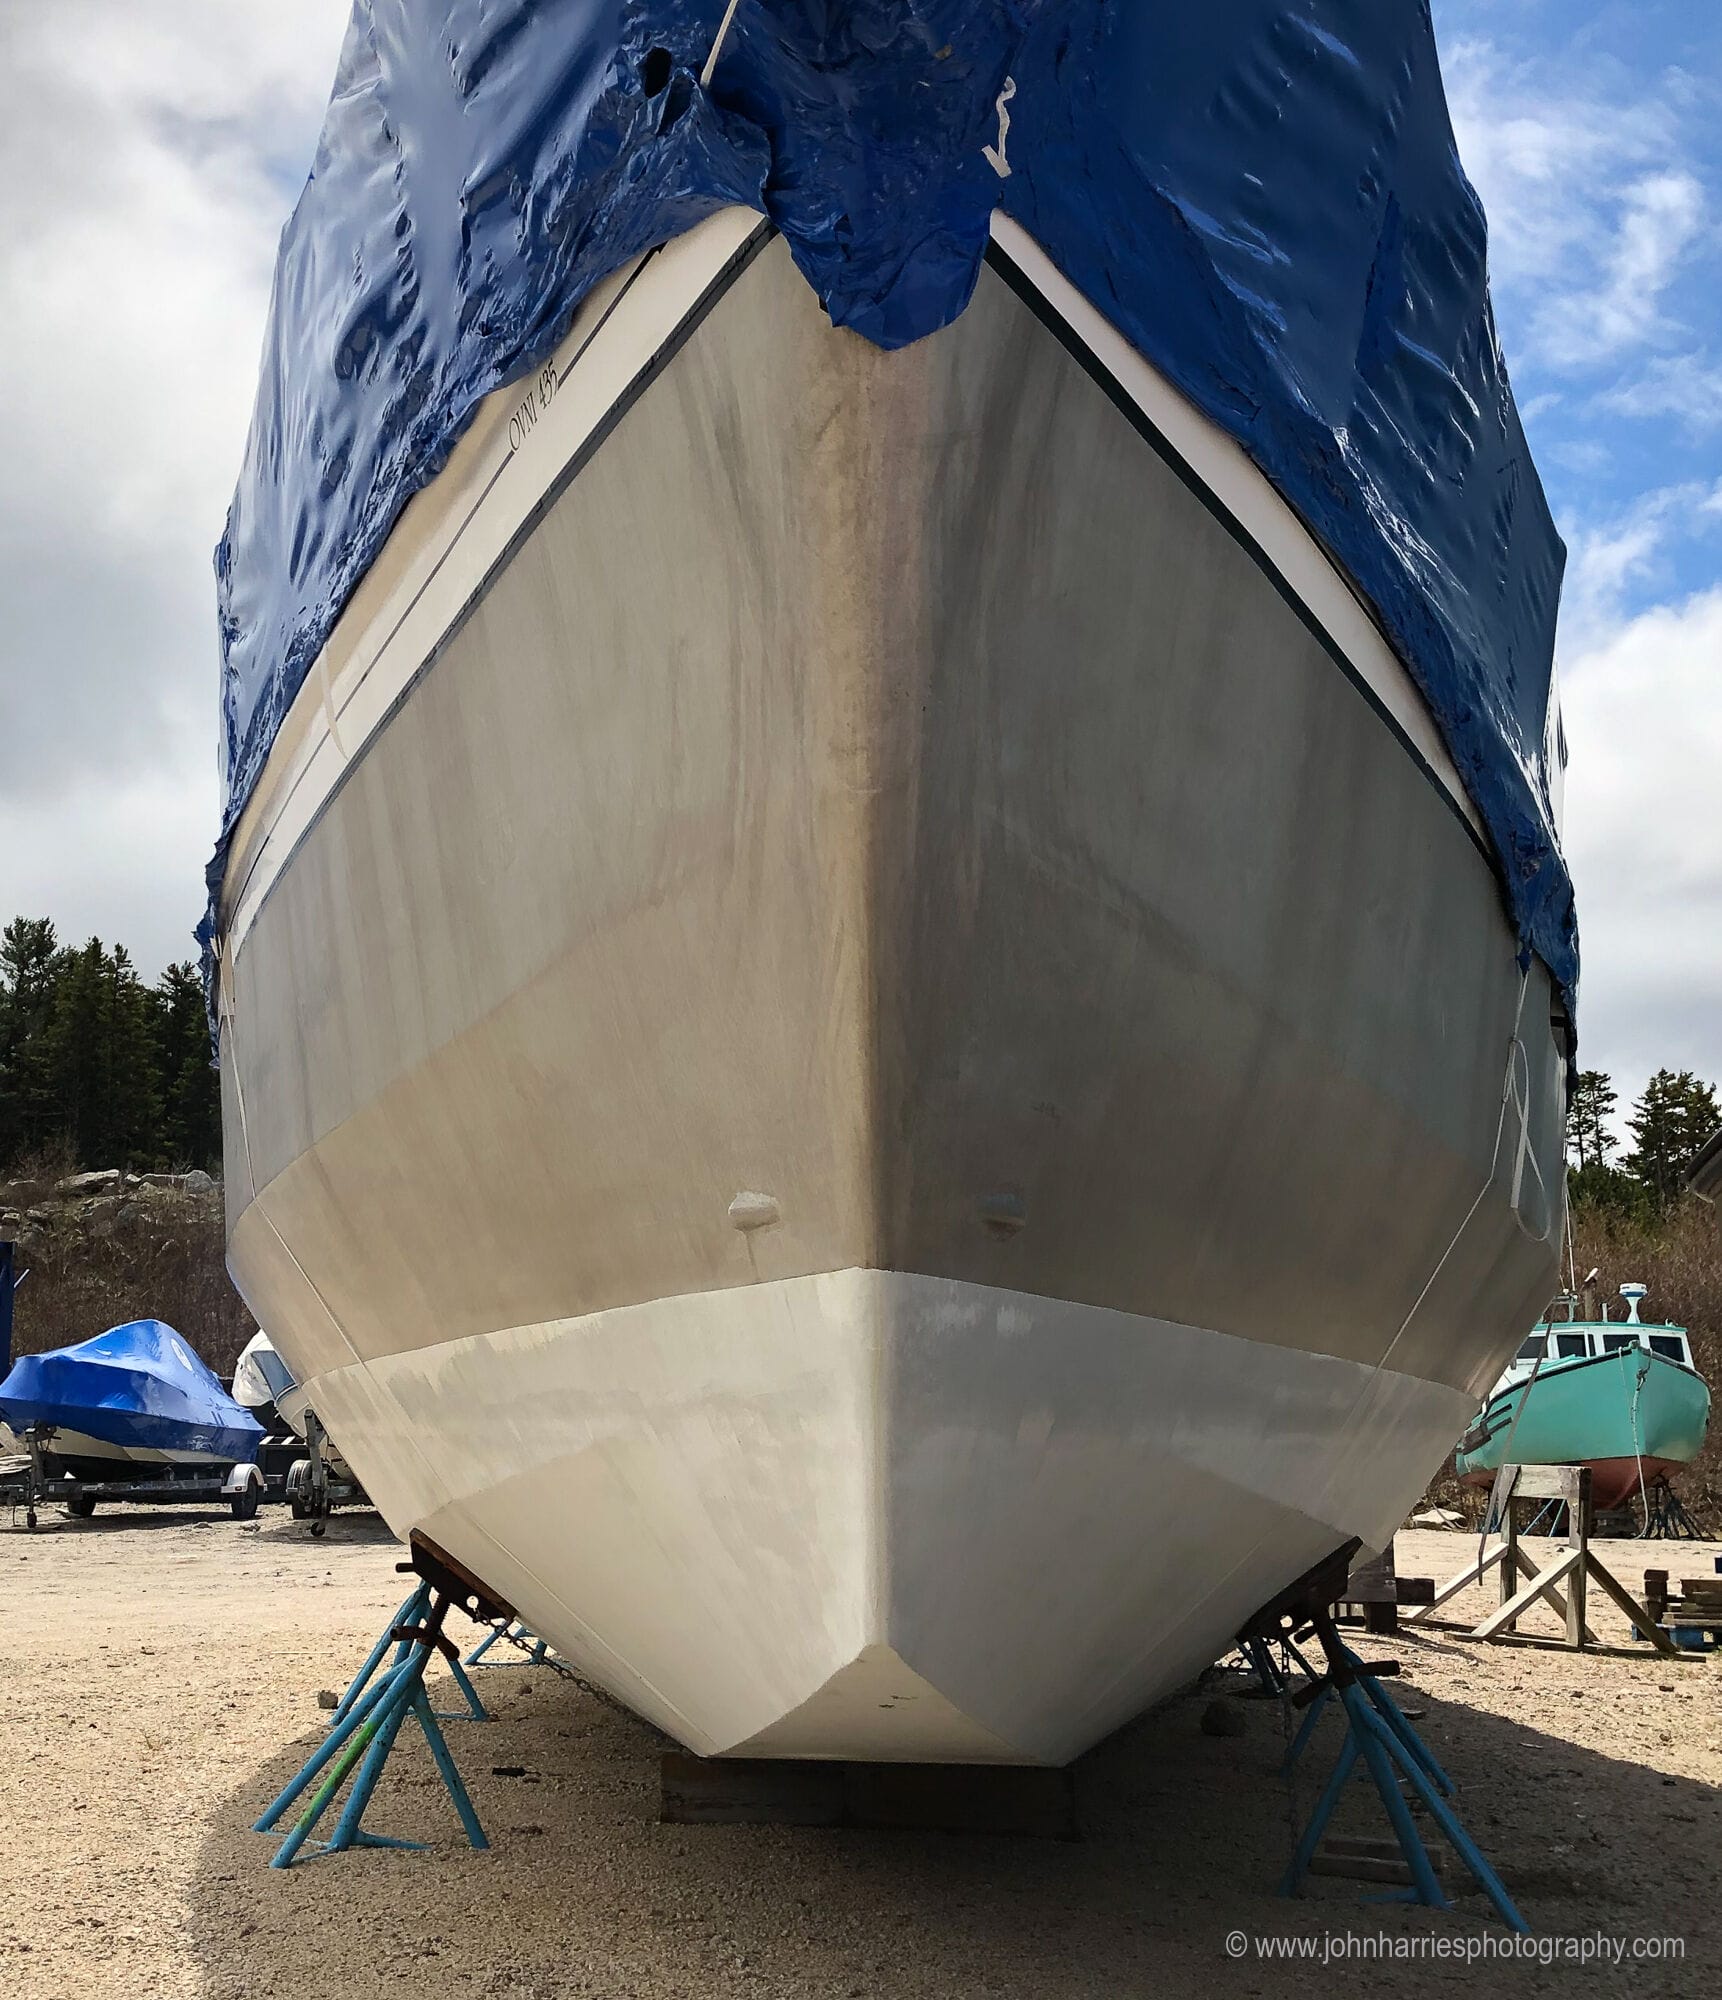 Choosing the Right Boat Hull Type: Deep V vs. Flat Bottom